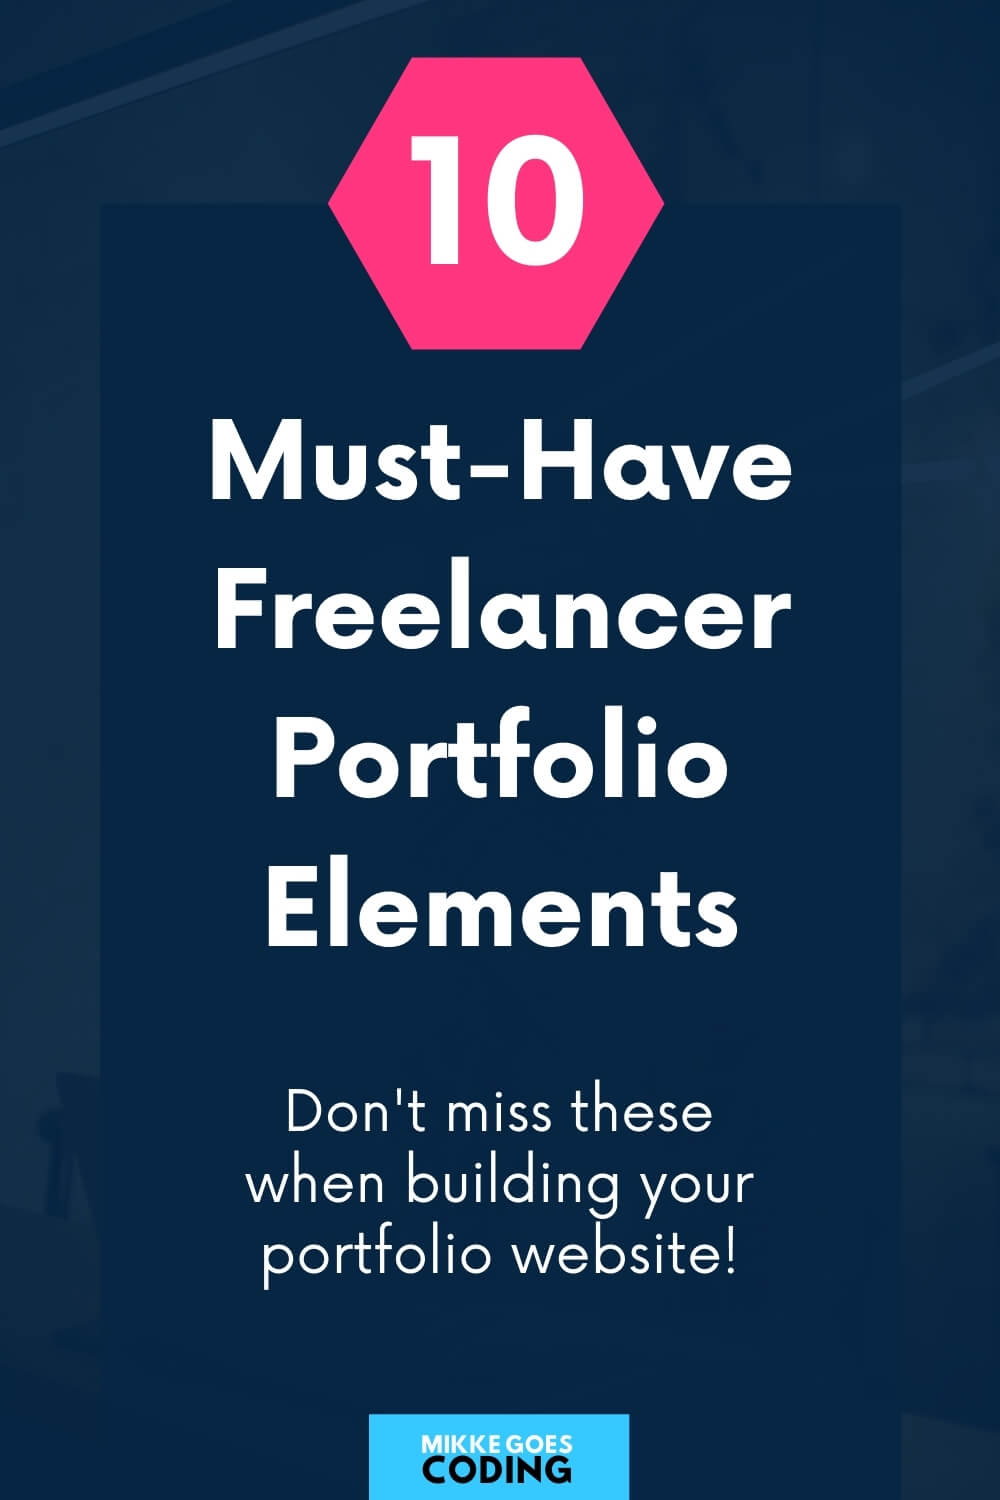 Freelancer portfolio website essentials